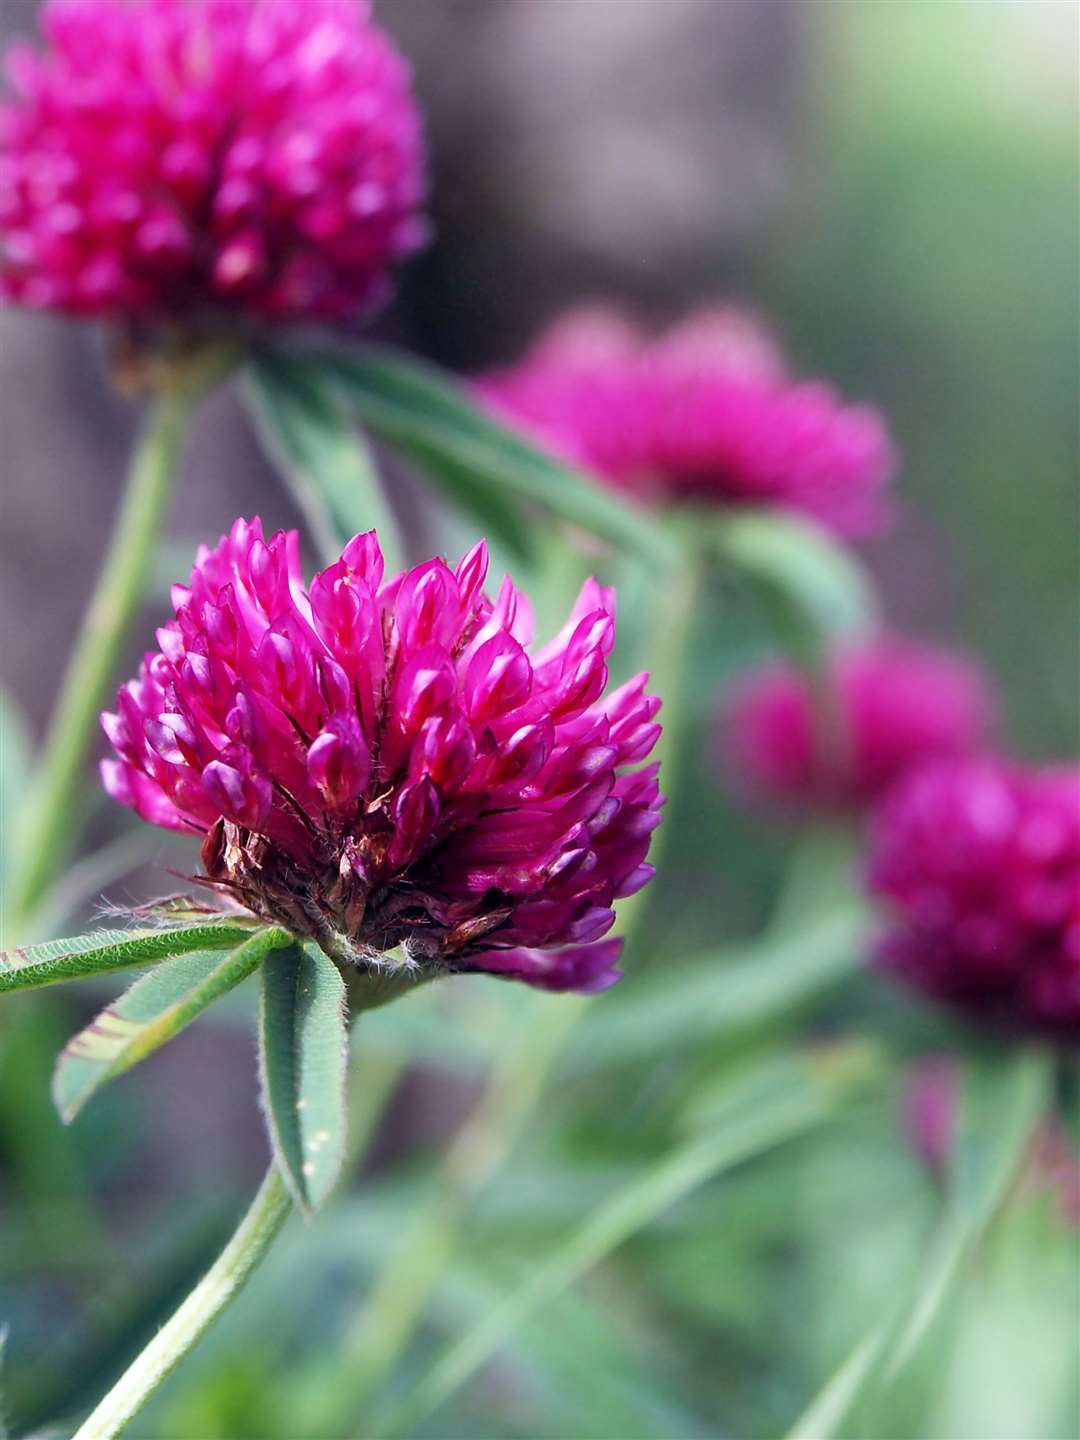 Crimson clover flowers will attract pollinators. Picture: iStock/PA